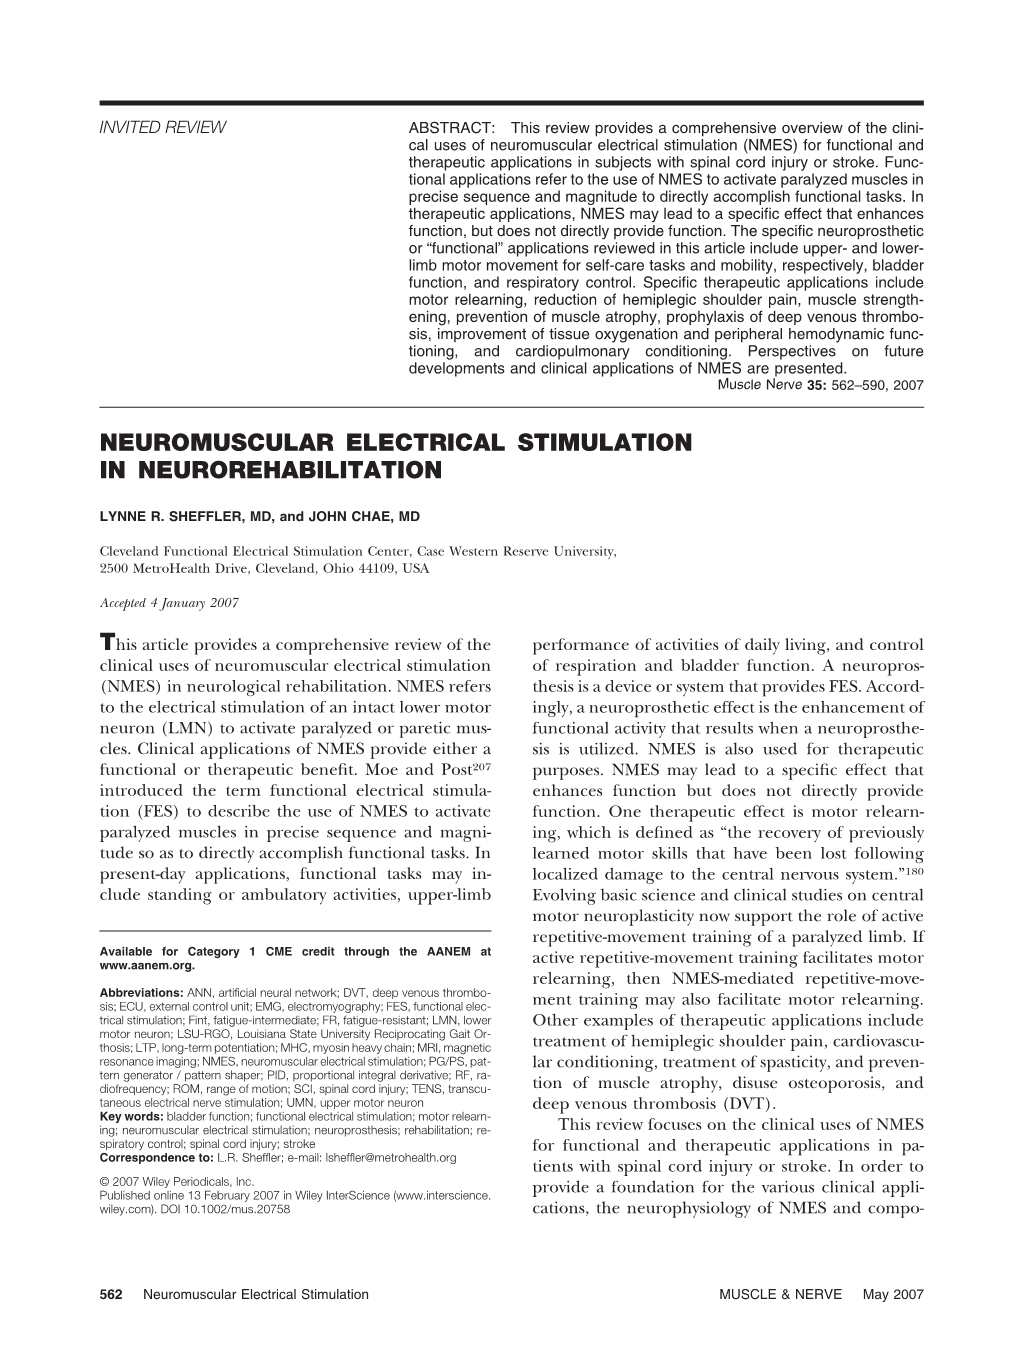 Neuromuscular Electrical Stimulation in Neurorehabilitation